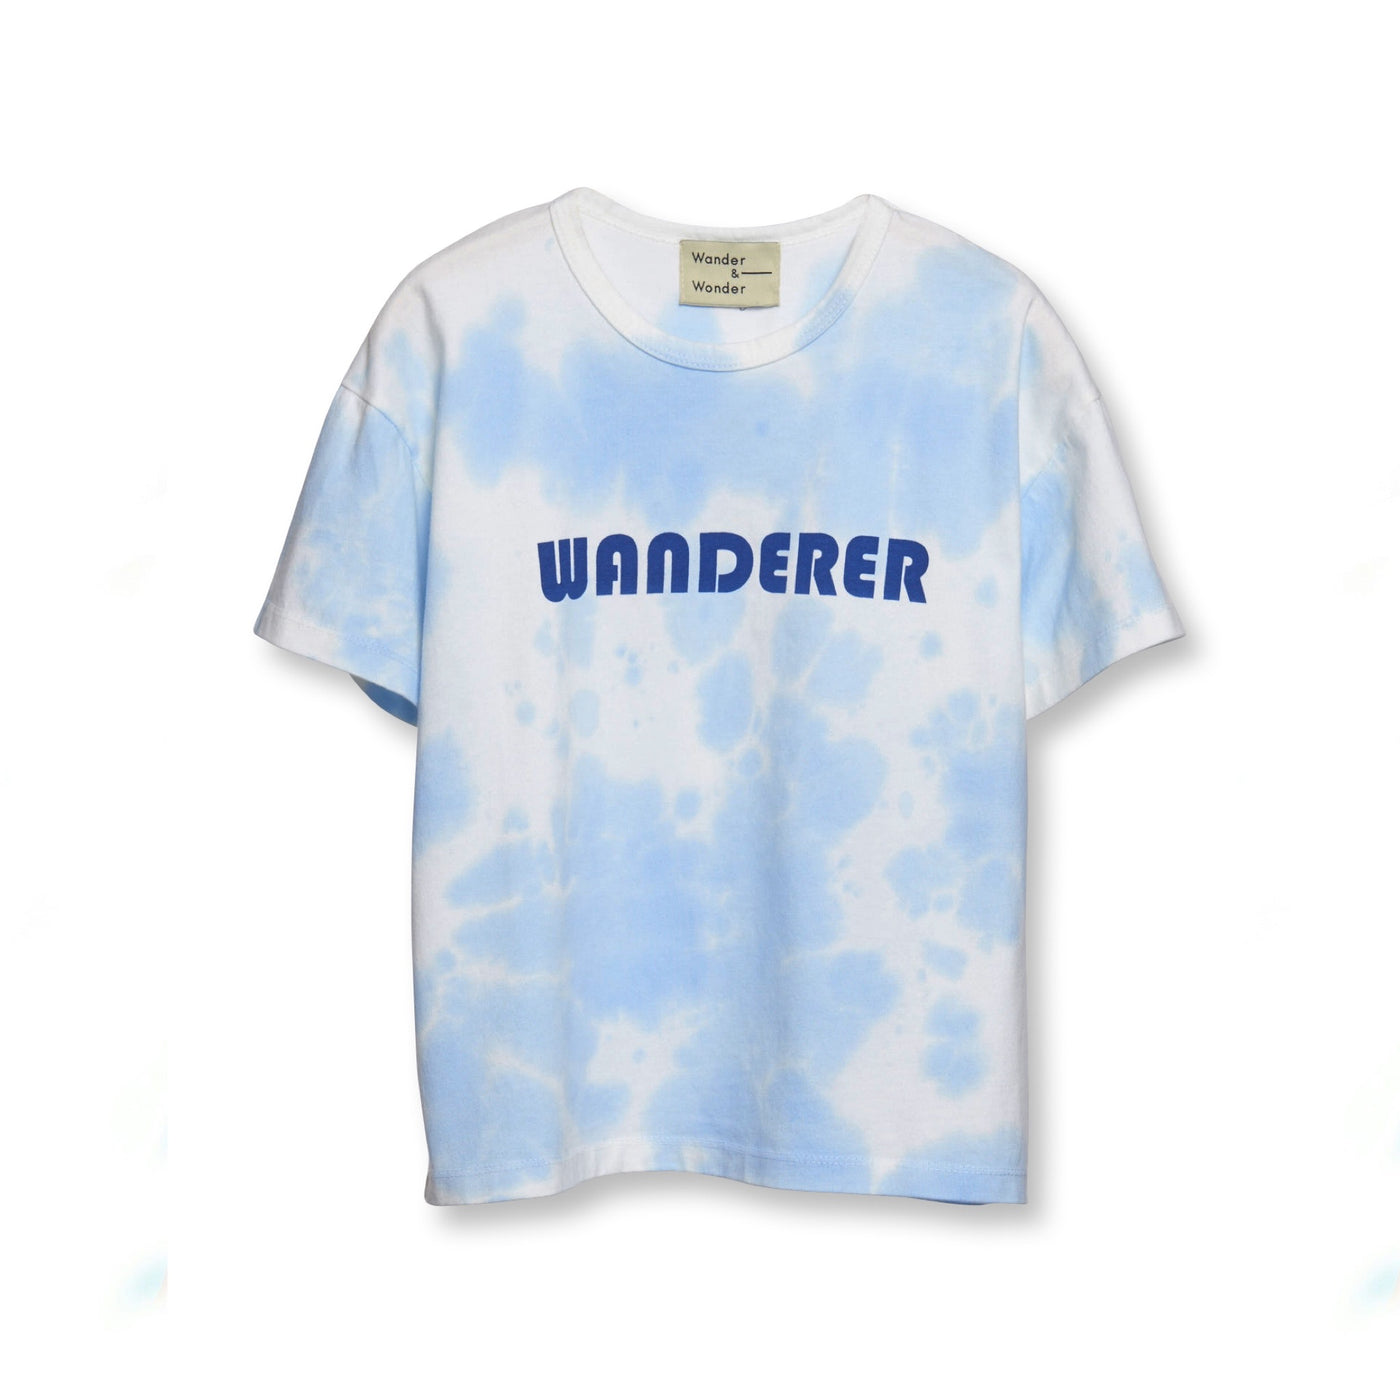 Wander & Wonder - T-shirt wanderer tie dye / 1-2j, 5-6j & 9-10j